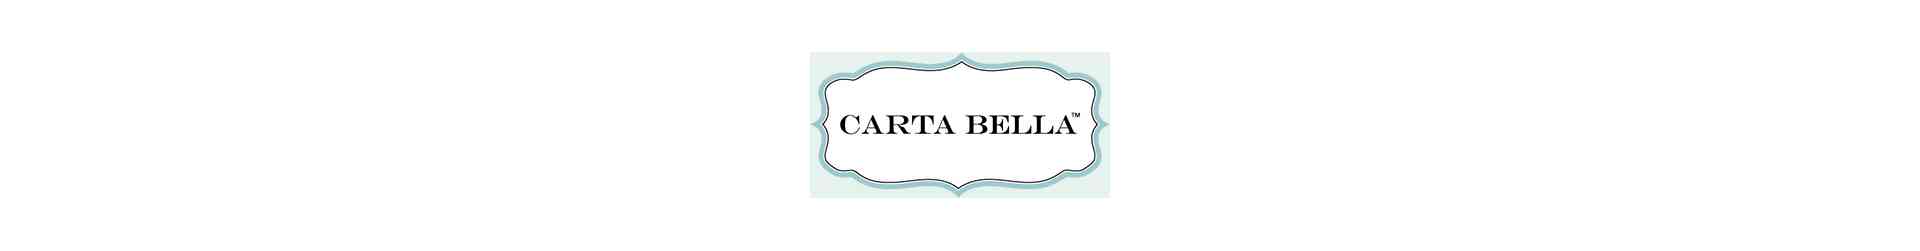 CARTA BELLA